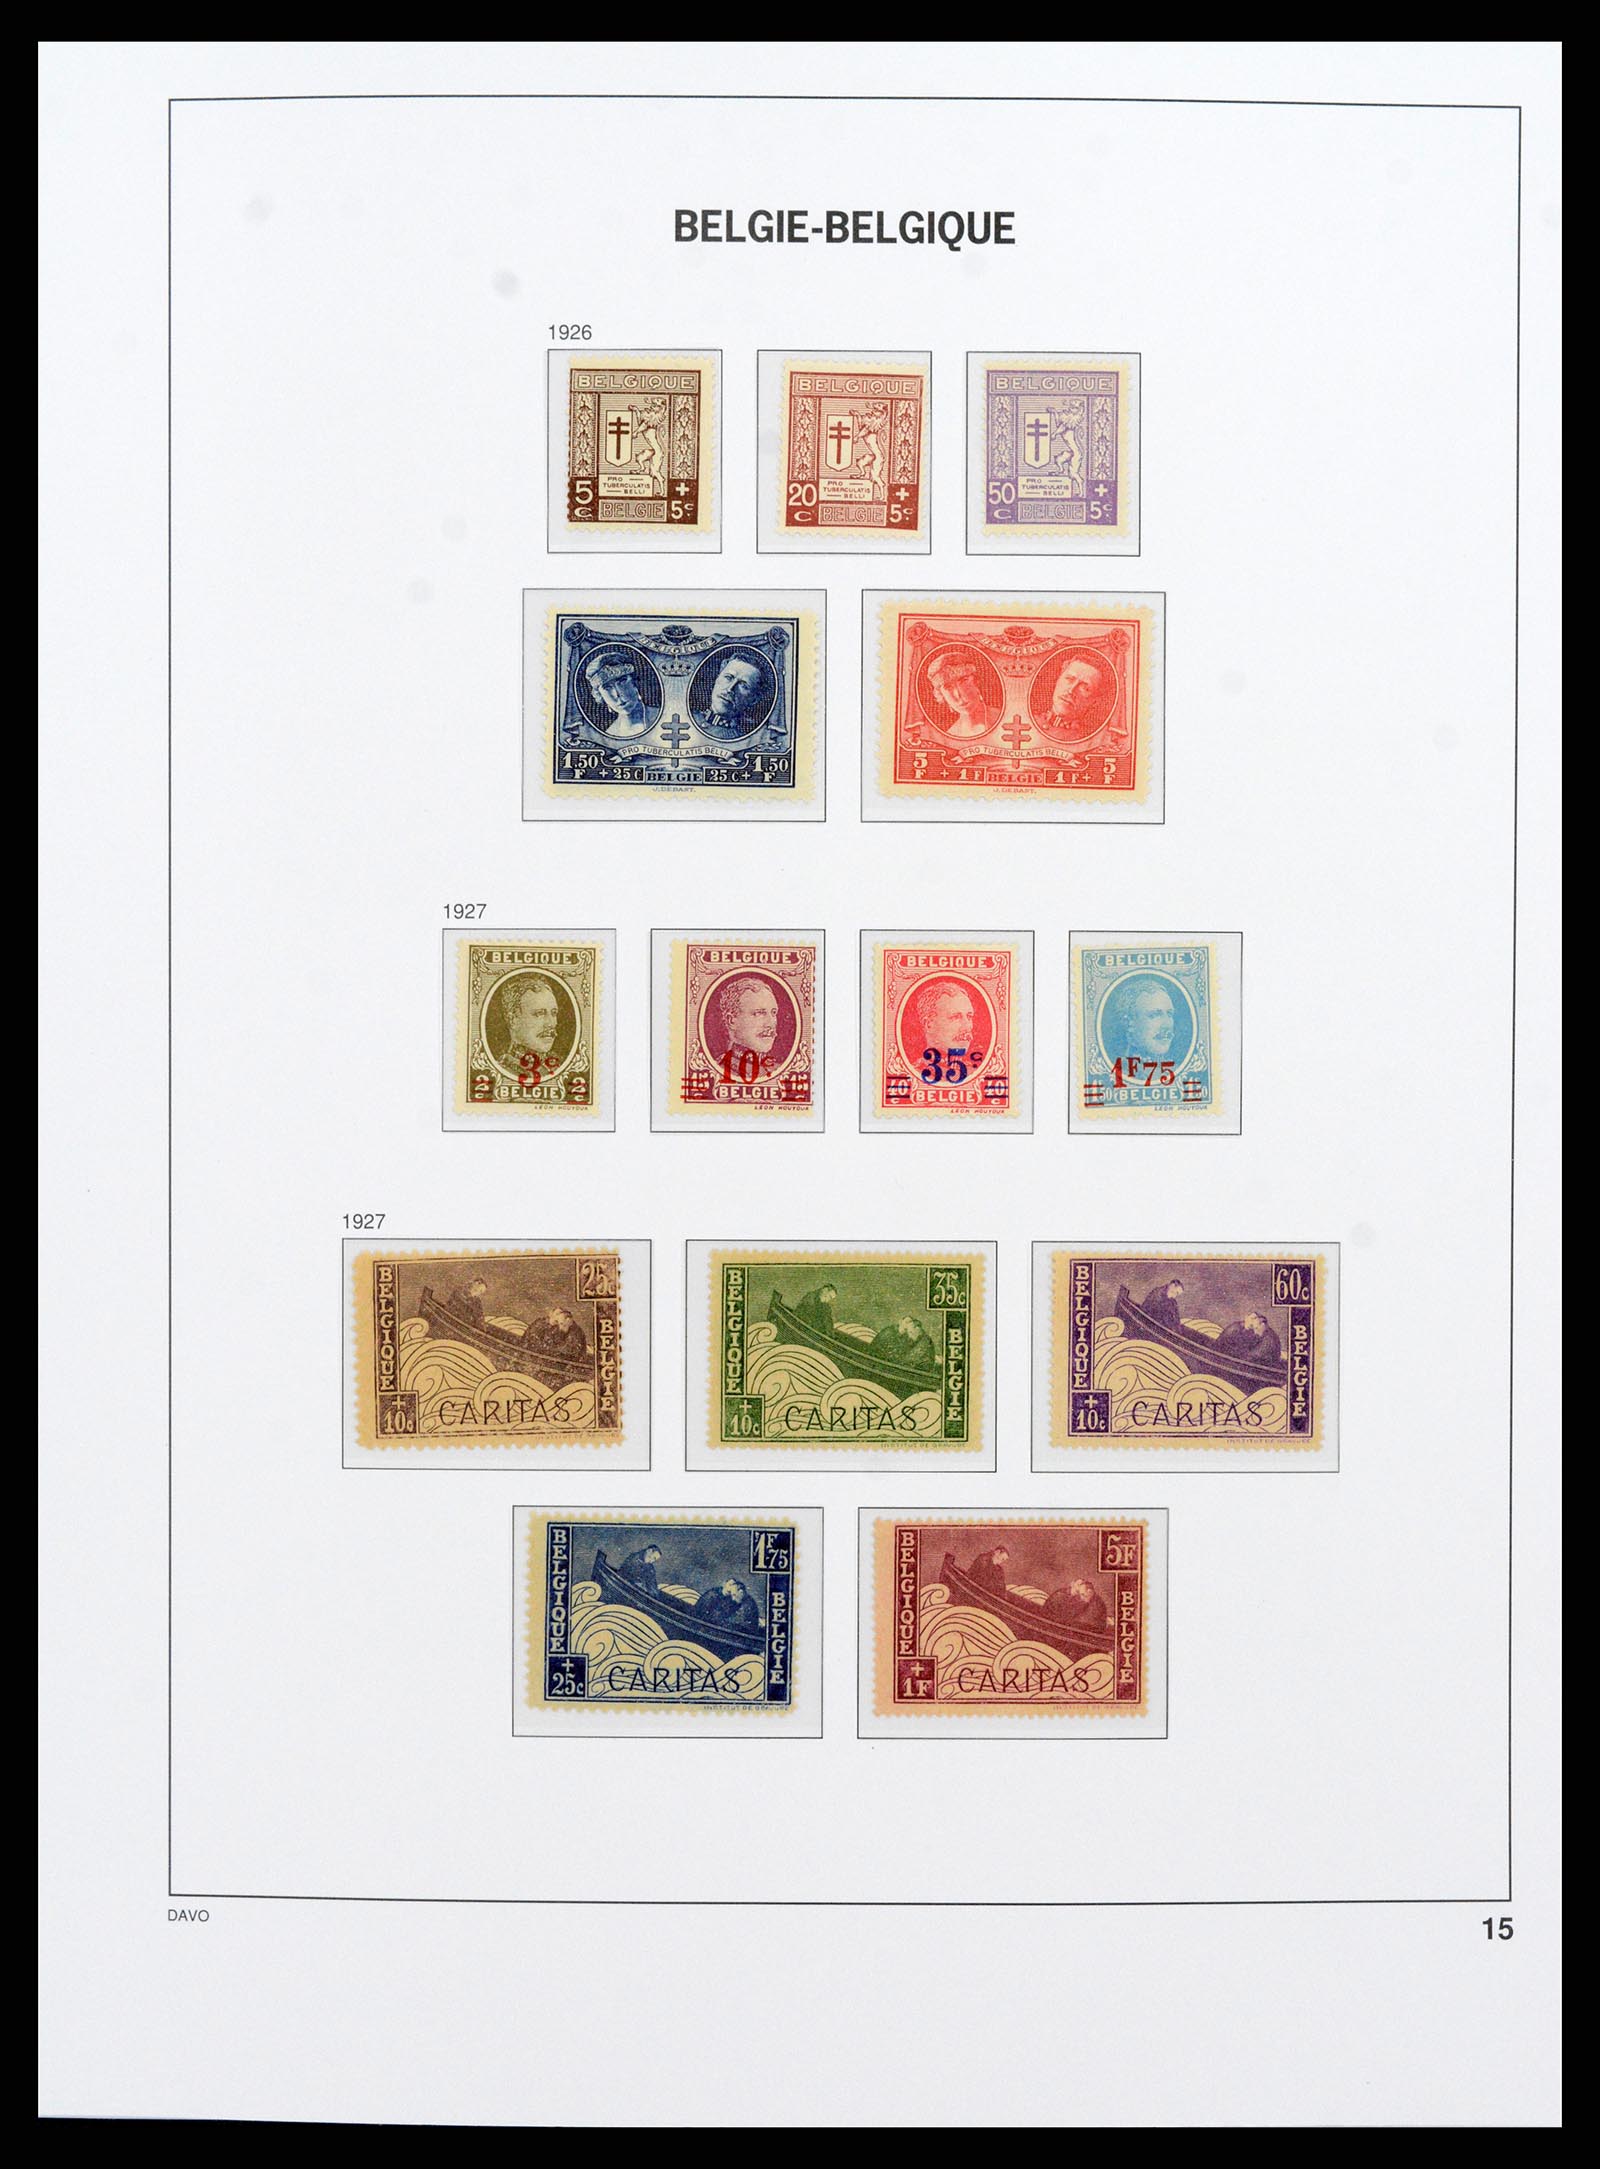 38073 013 - Stamp collection 38073 Belgium 1849-1950.